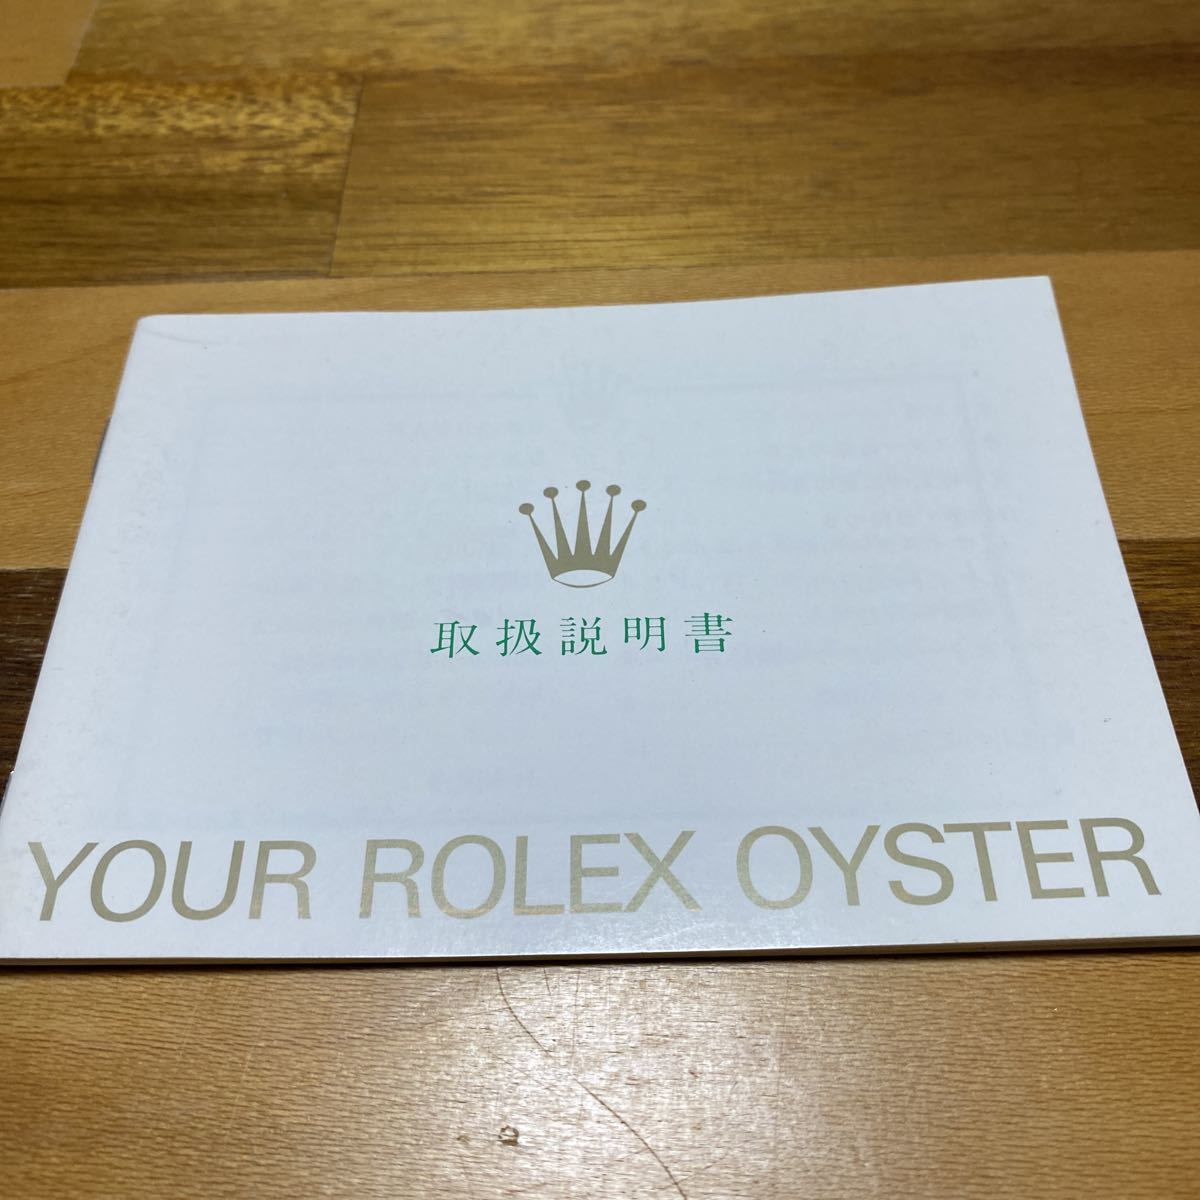 2712【希少必見】ロレックス 取扱説明書 Rolex 定形郵便94円可能_画像1